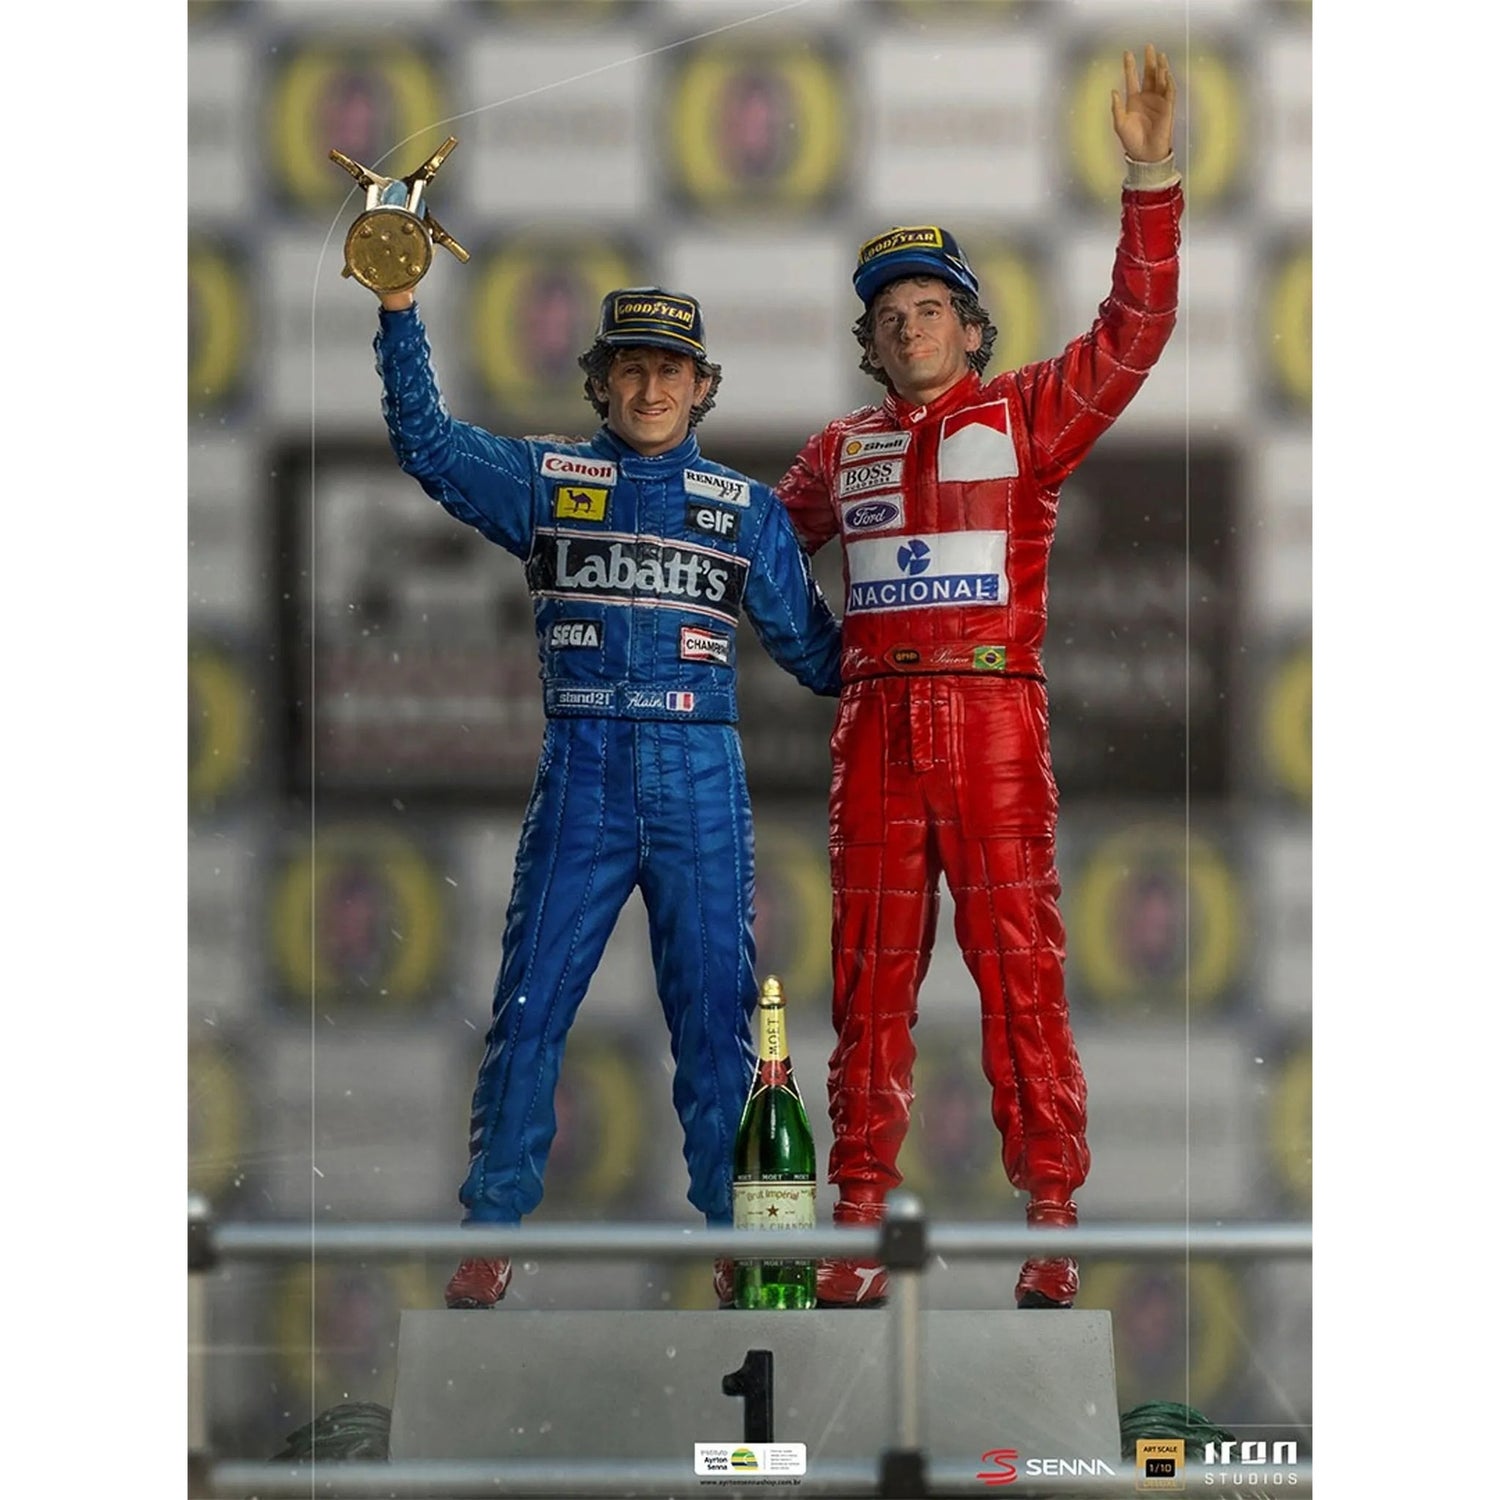 Iron Studios Ayrton Senna And Alain Prost Deluxe The Last Podium Art Scale 1/10 Collectible Statue (27cm)